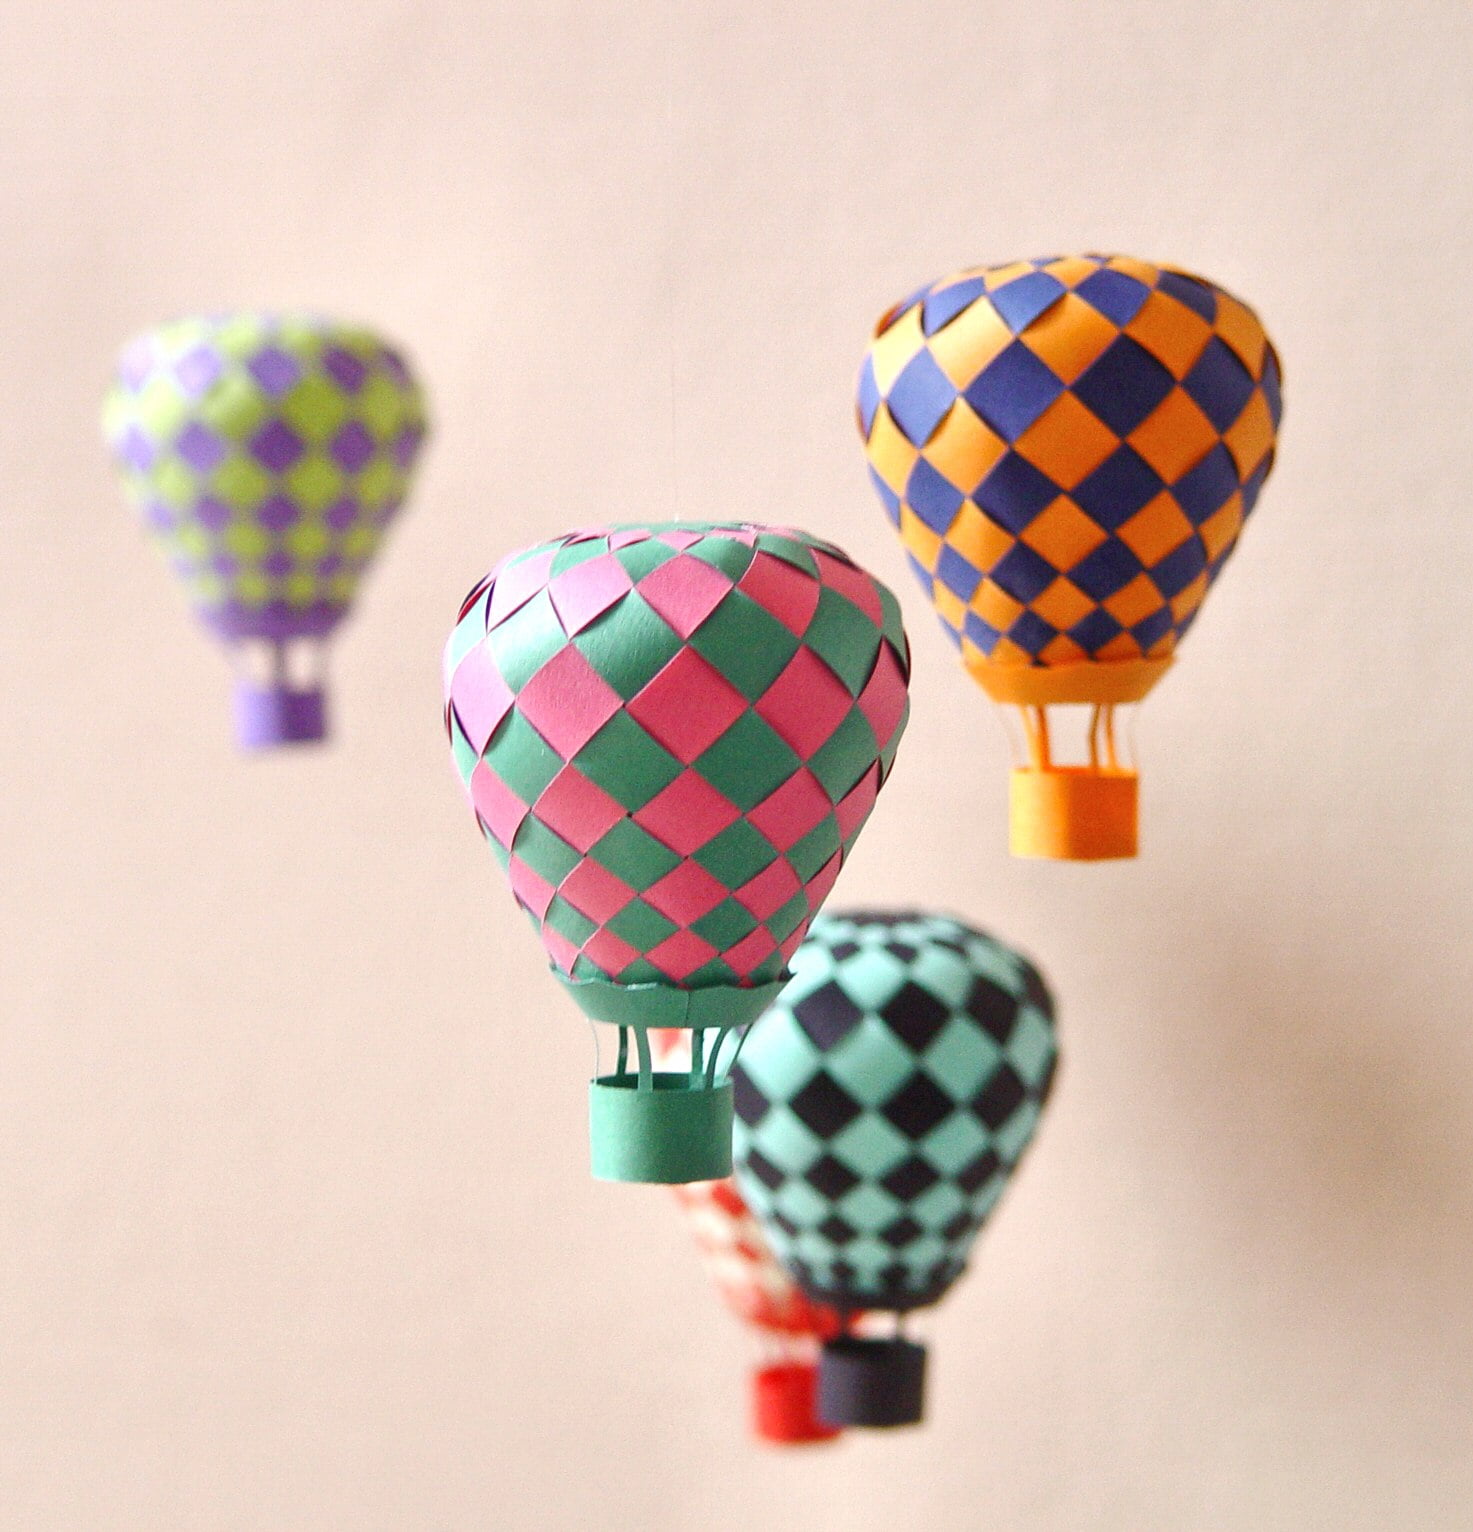 Extraordinary Creative DIY Paper Art Project -Colorful Hot Air Balloon Mobile homesthetics decor (6)